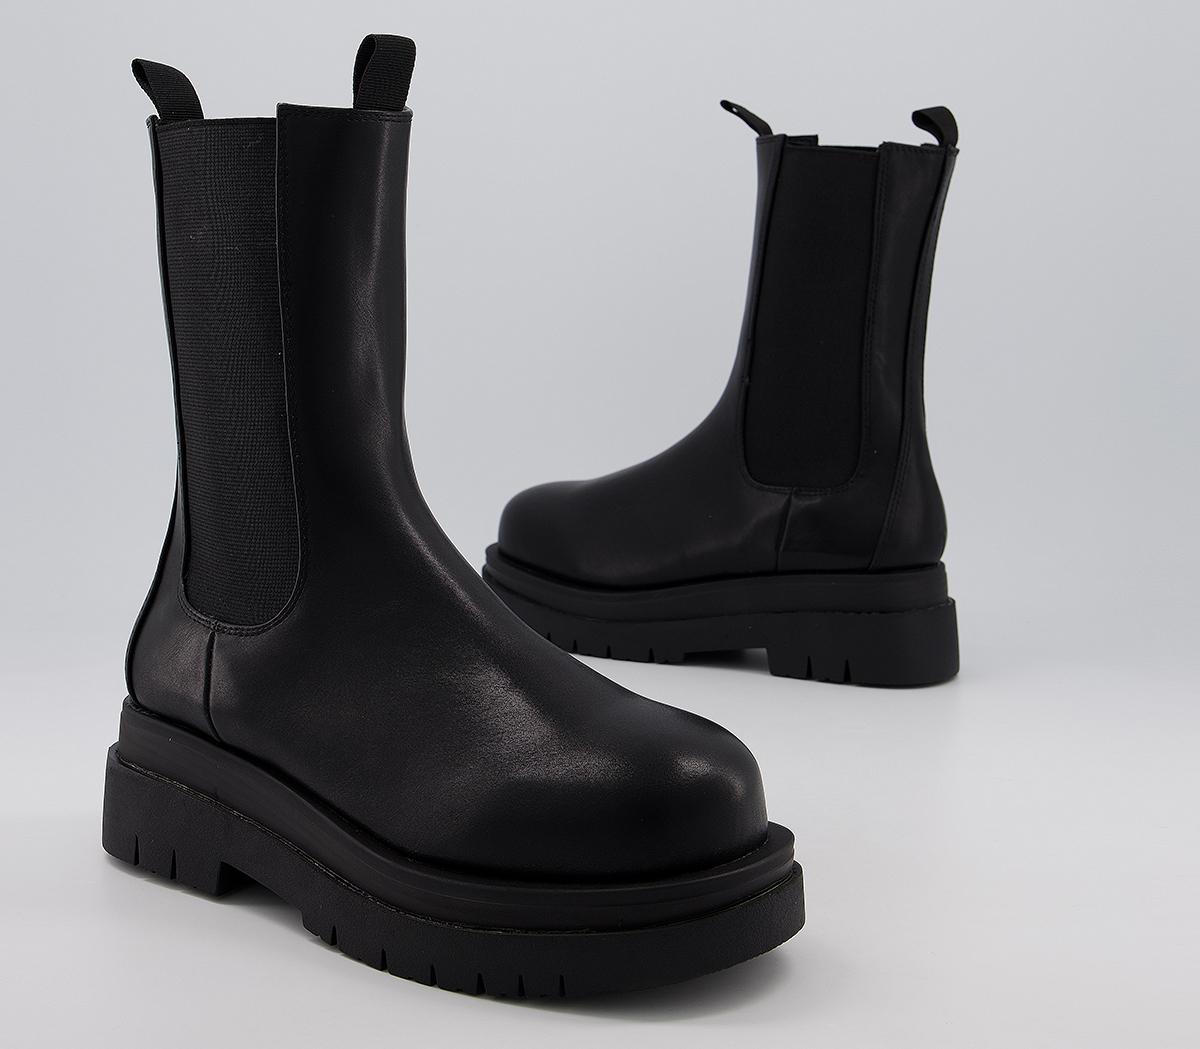 Koi Footwear Chunky Mid Calf Boots Black Knee High Boots 9060